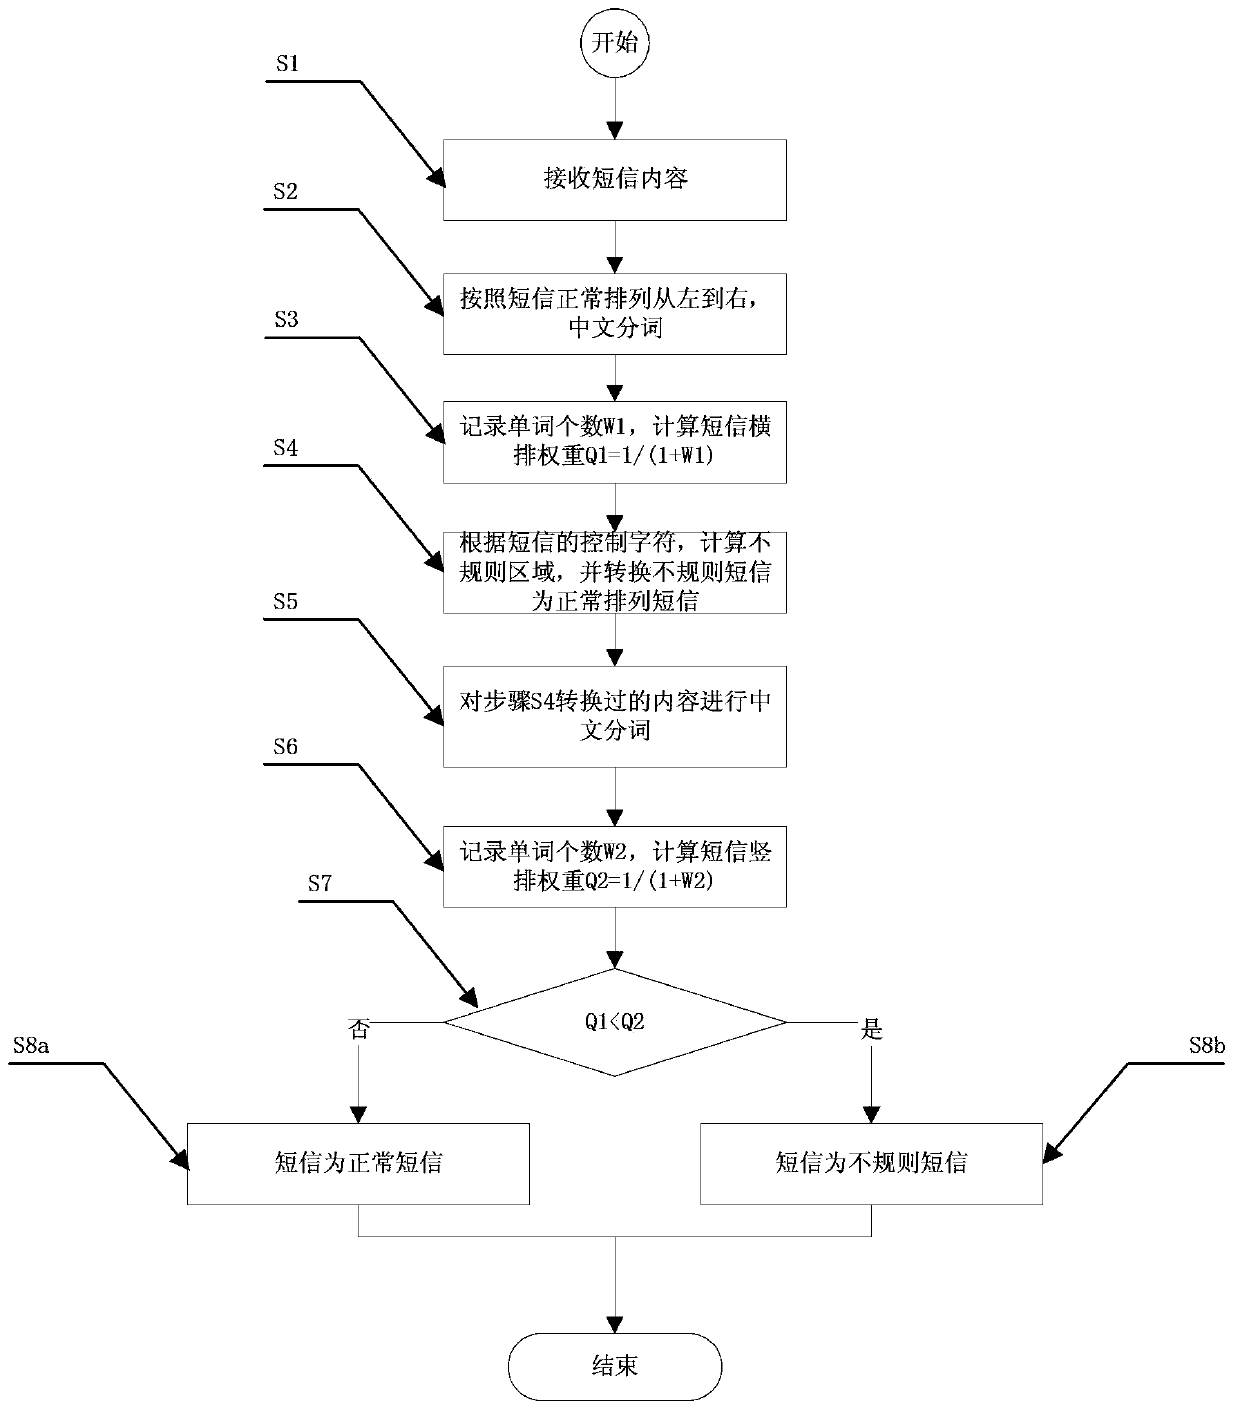 Method for identifying irregular spam short message on the basis of Chinese word segmentation